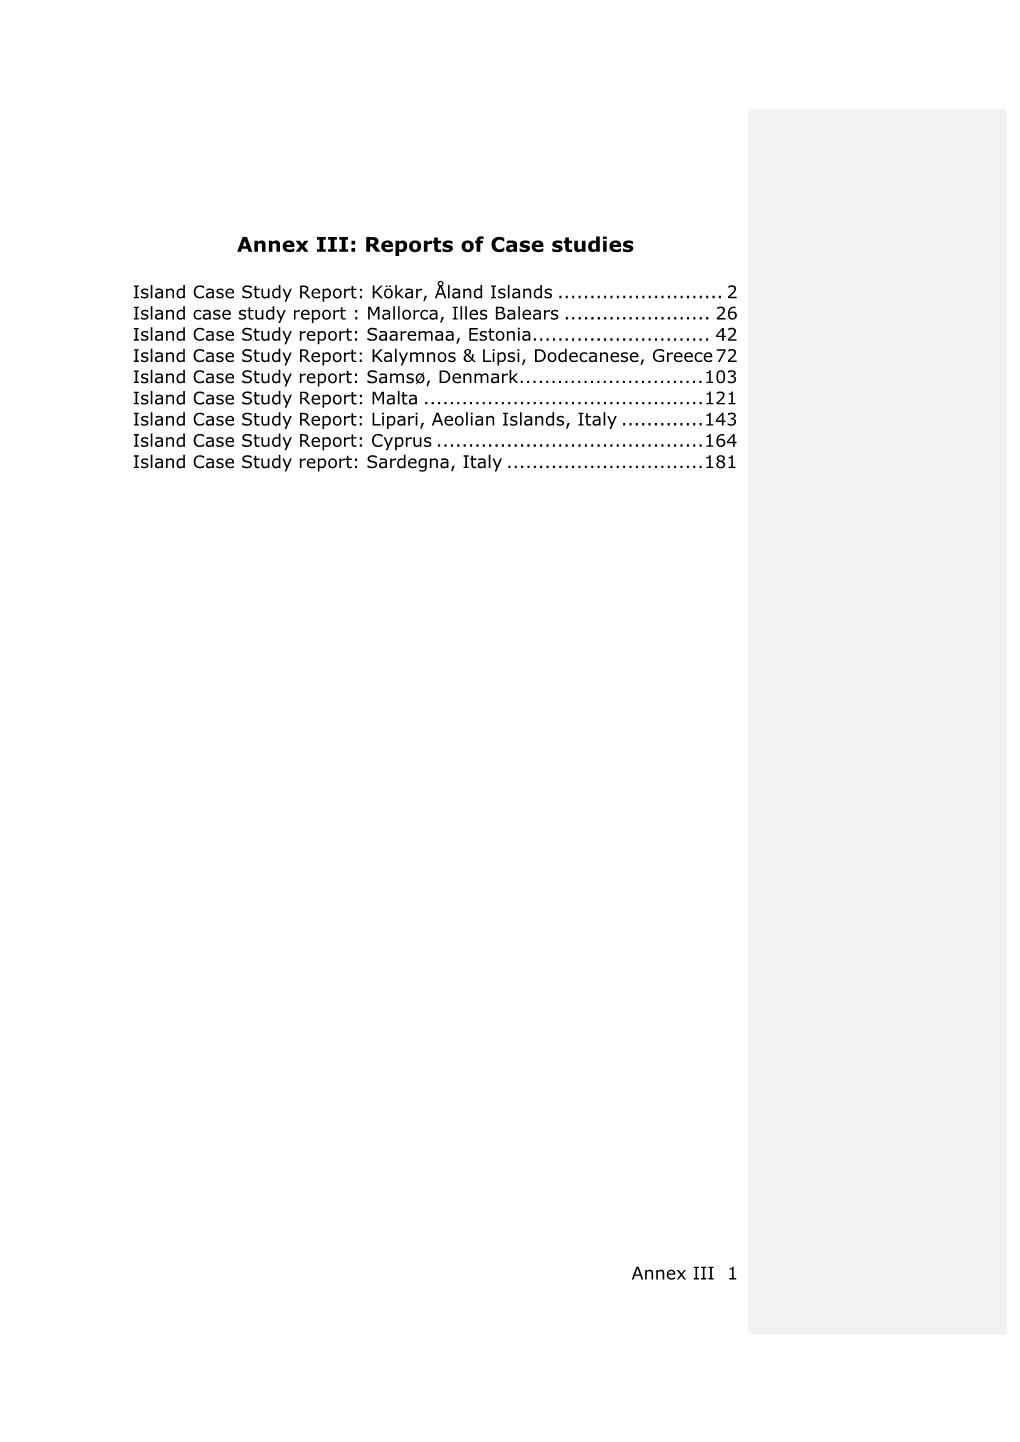 Annex III: Reports of Case Studies